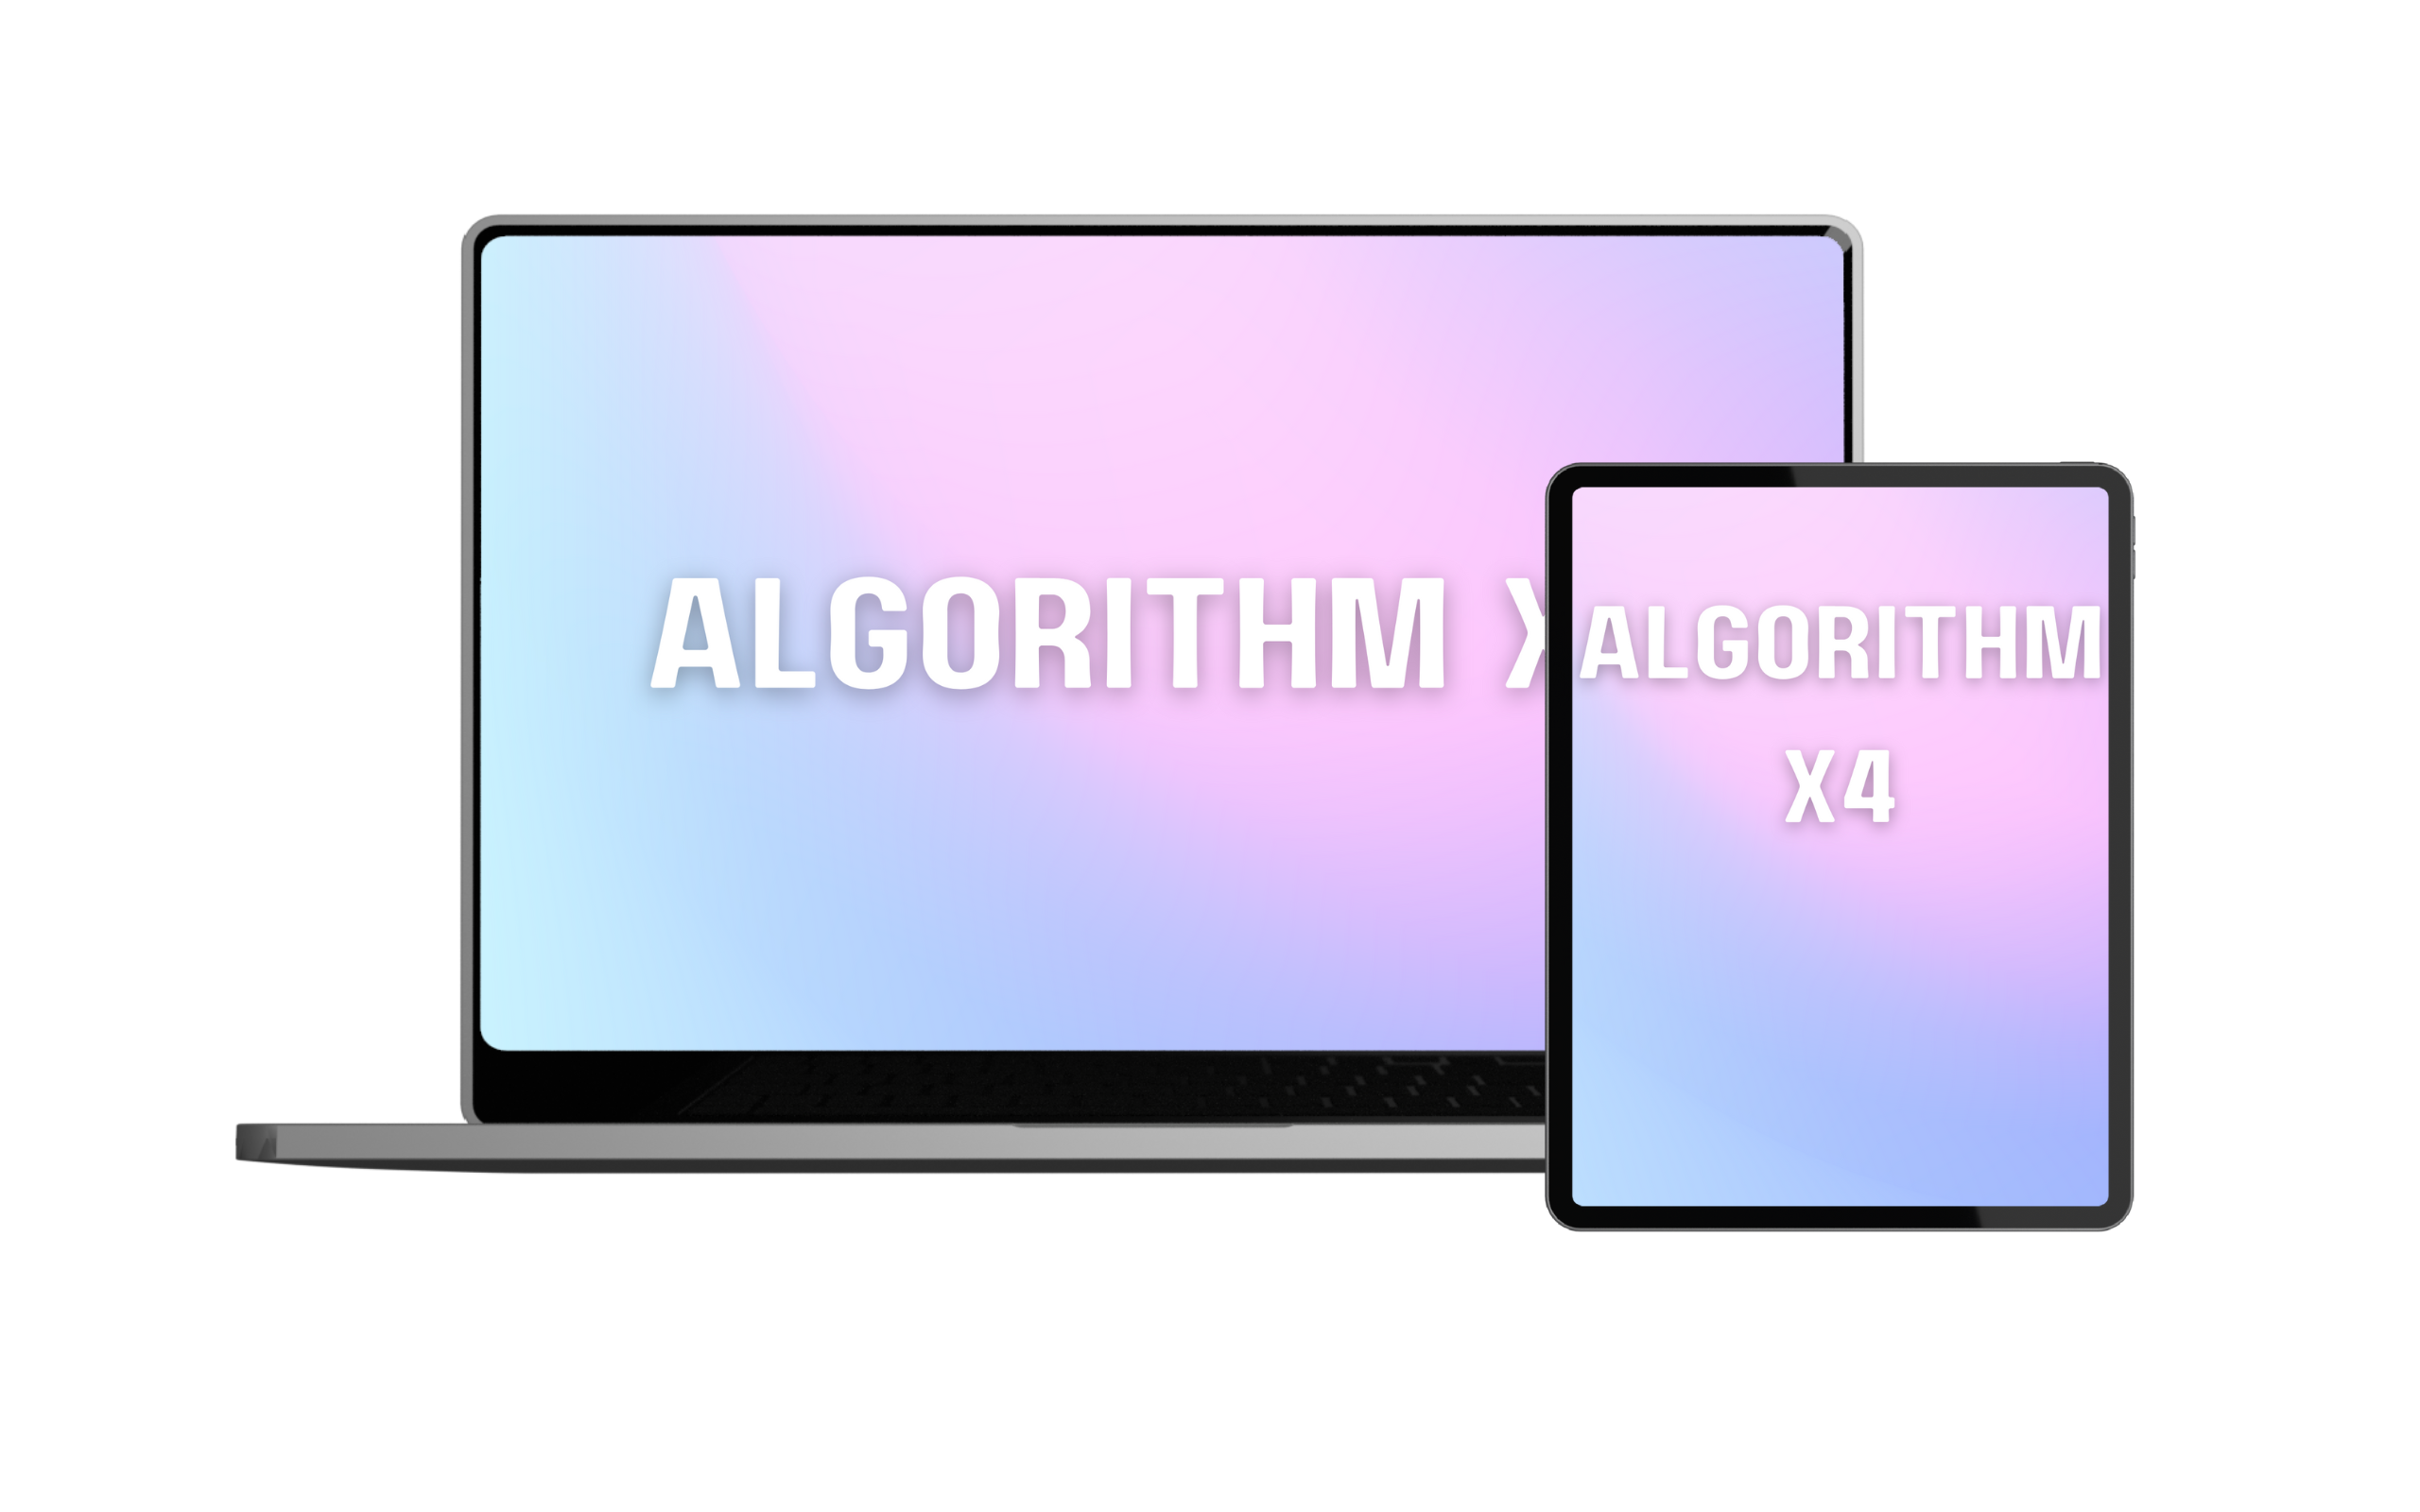 Algorithmx4